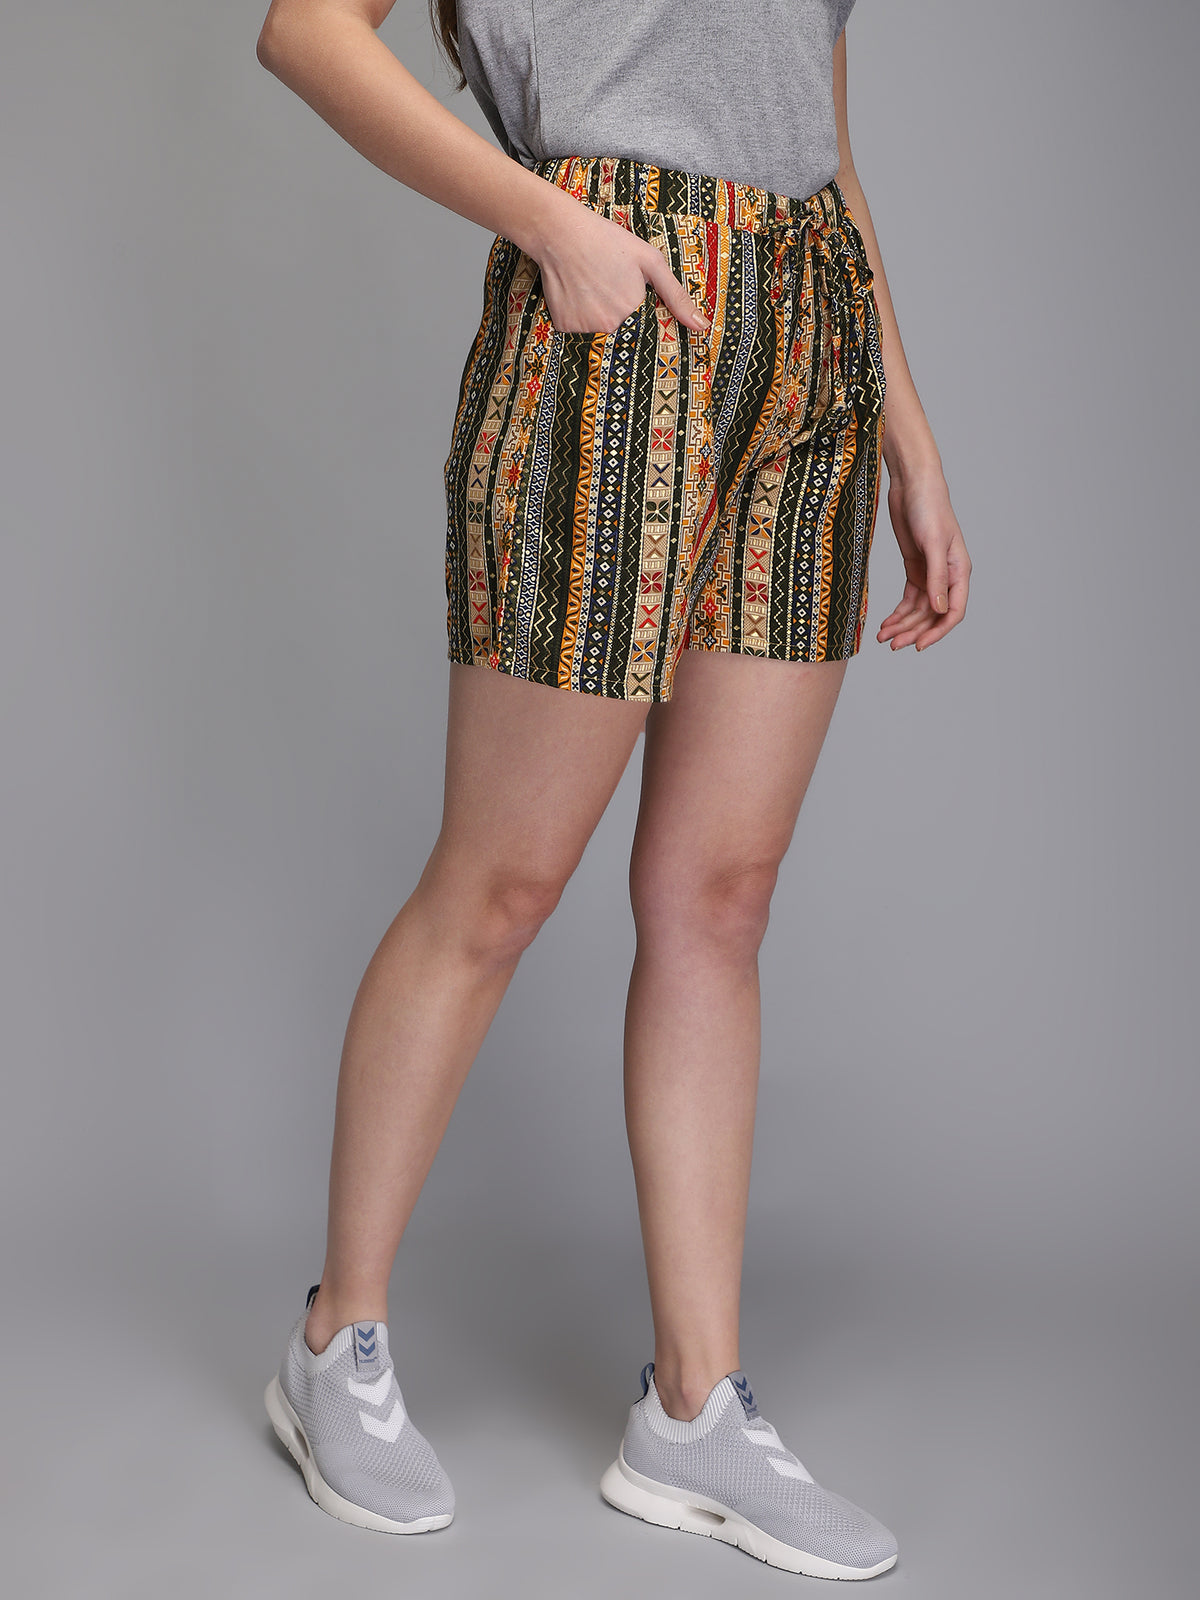 Printed & jacquard multicolor rayon women shorts